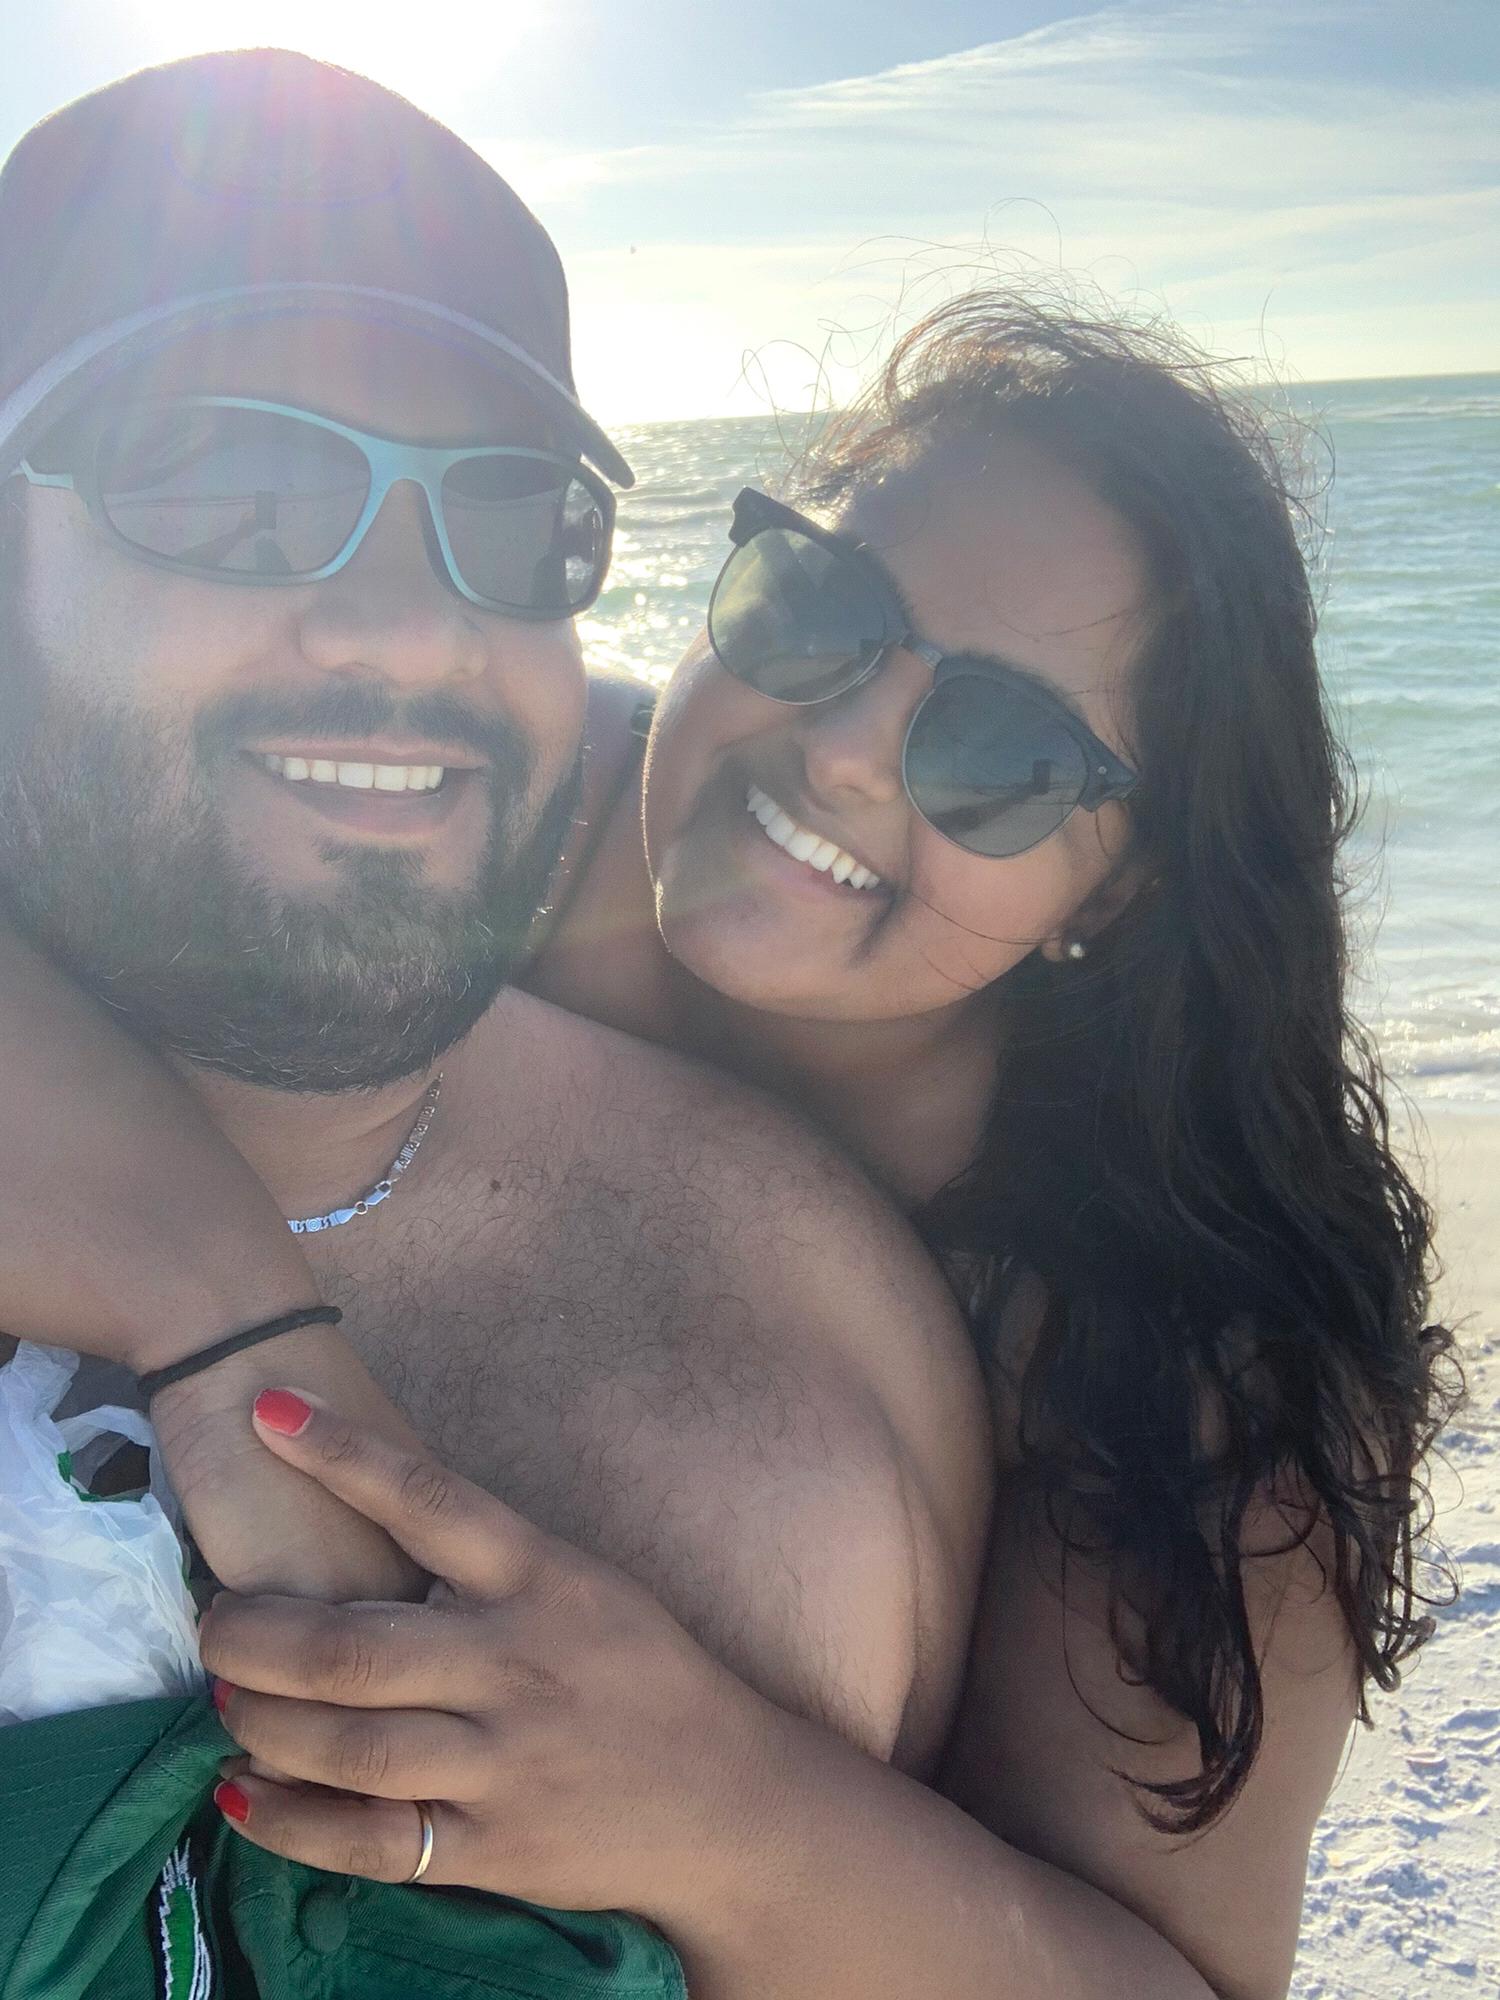 Honeymoon Island Beach- Florida, December 2019